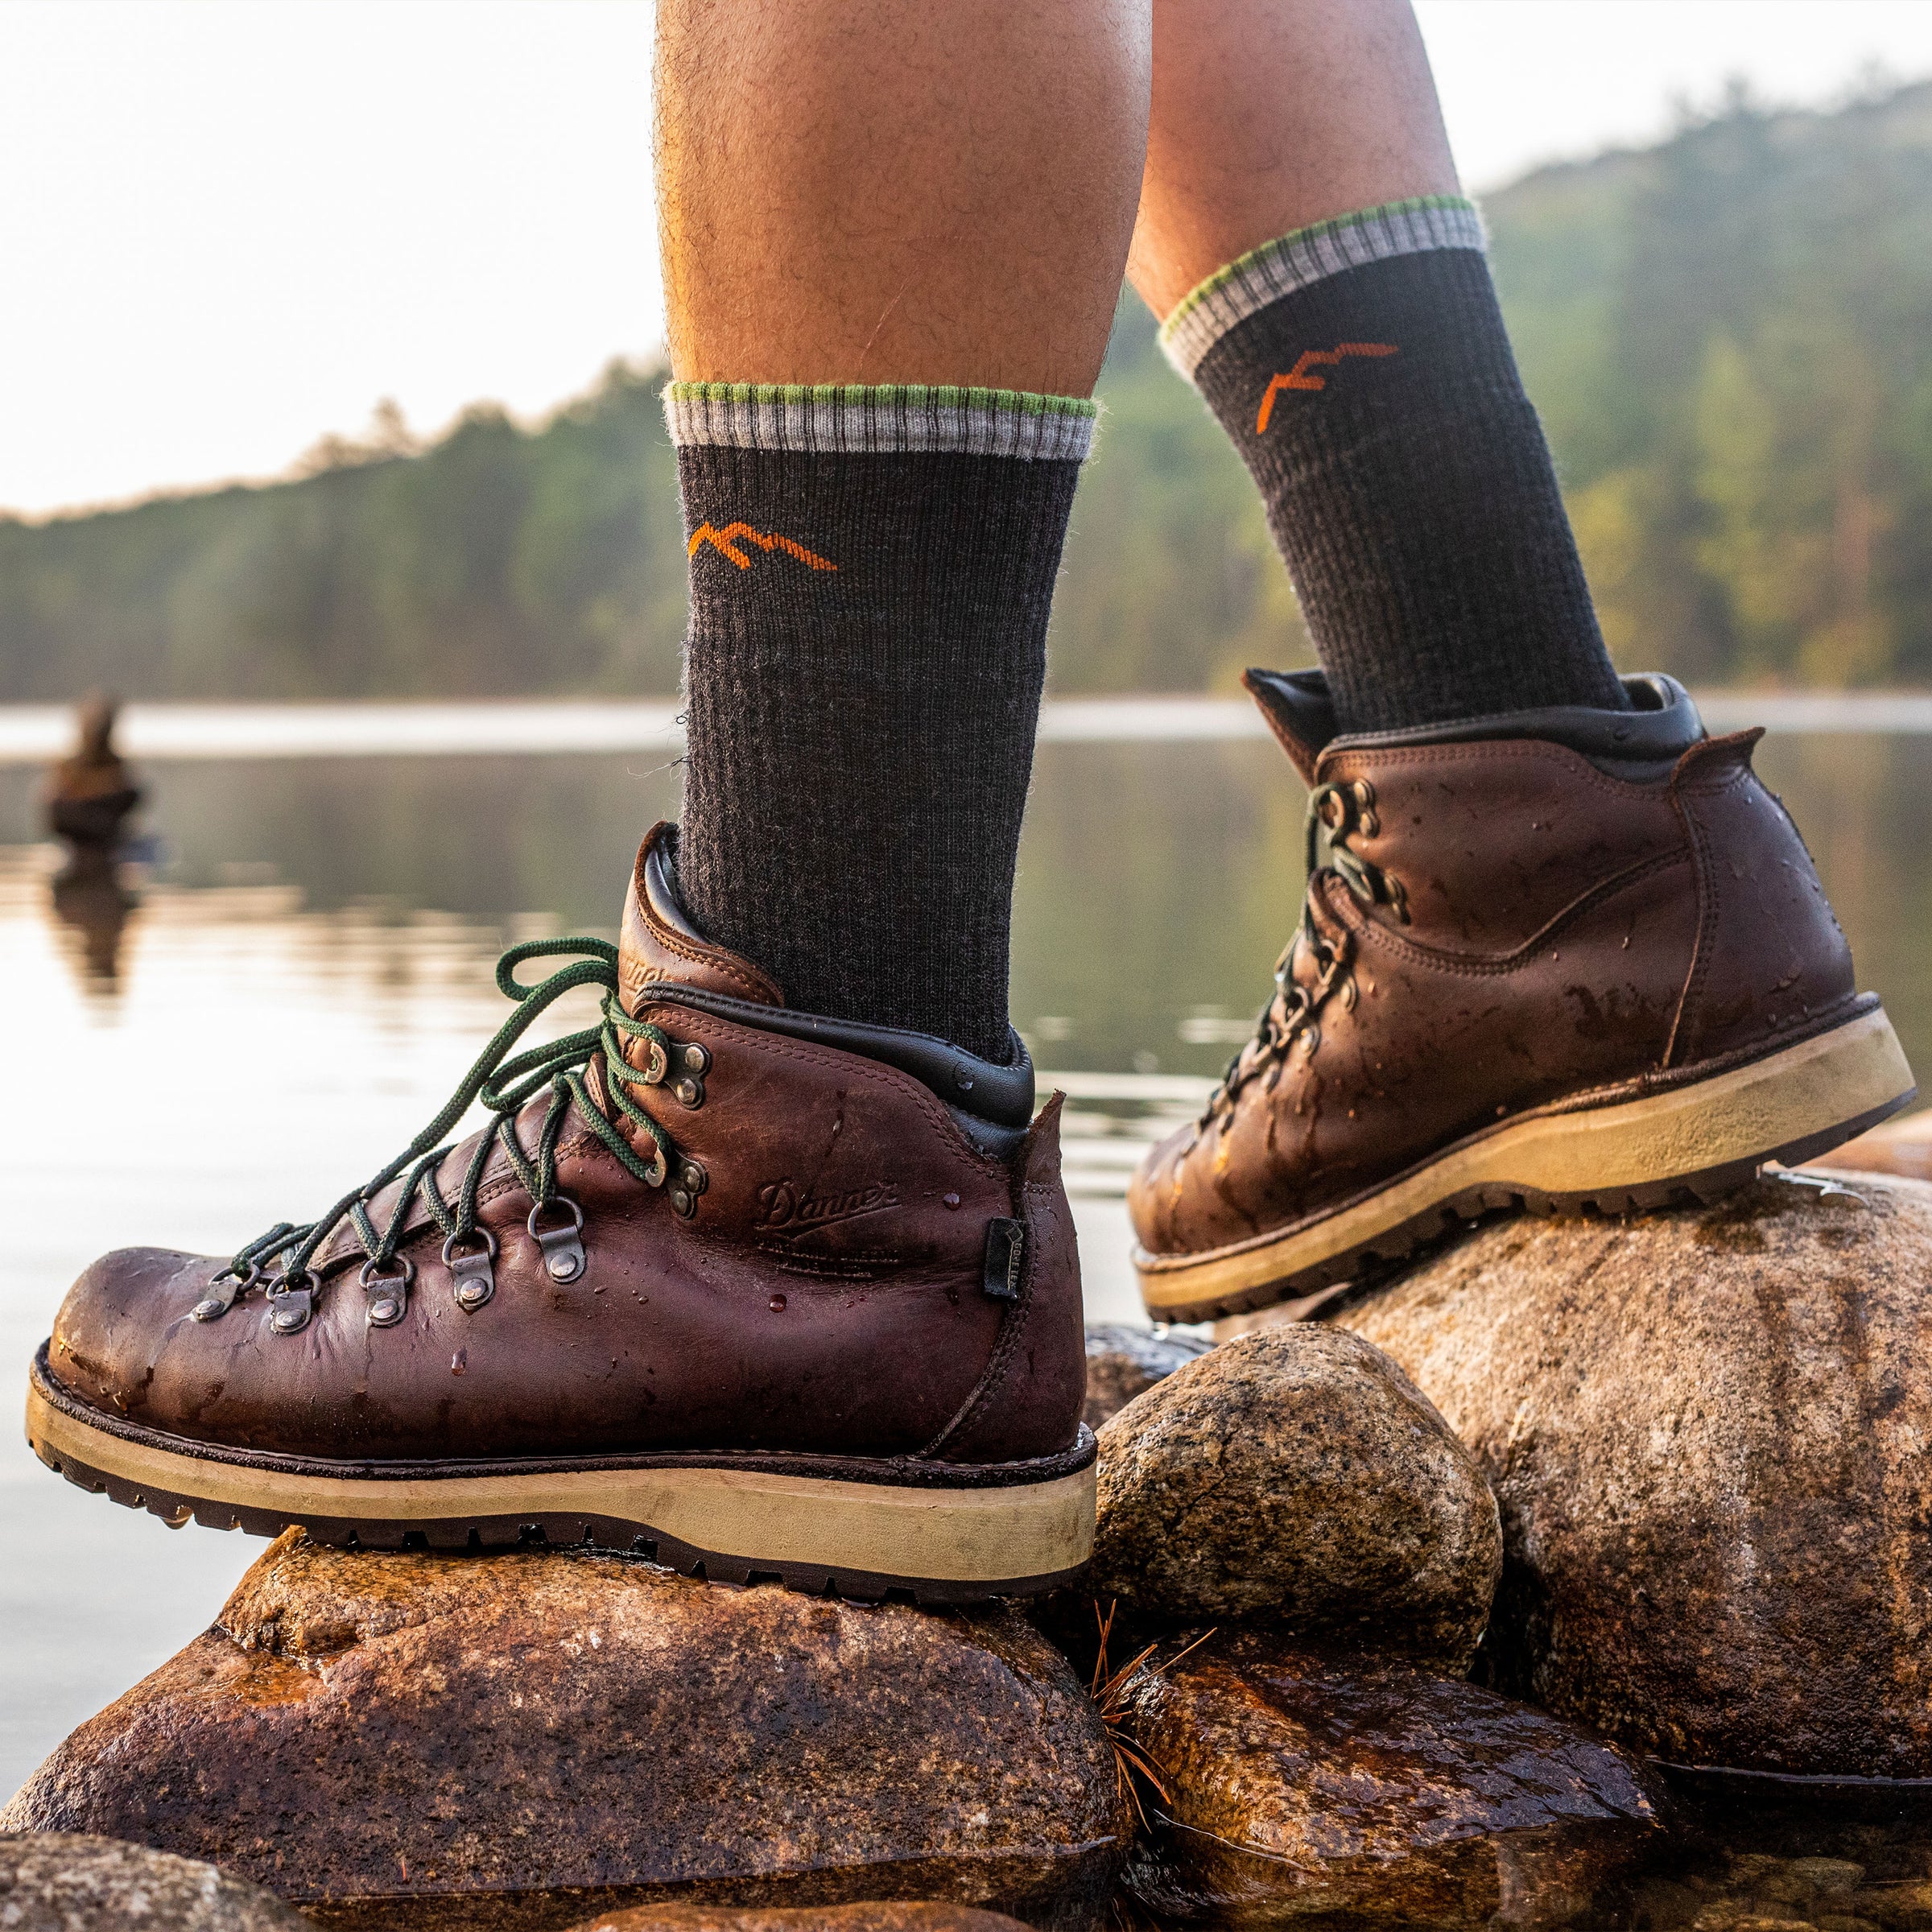 darn tough vermont men's merino wool boot cushion hiking socks